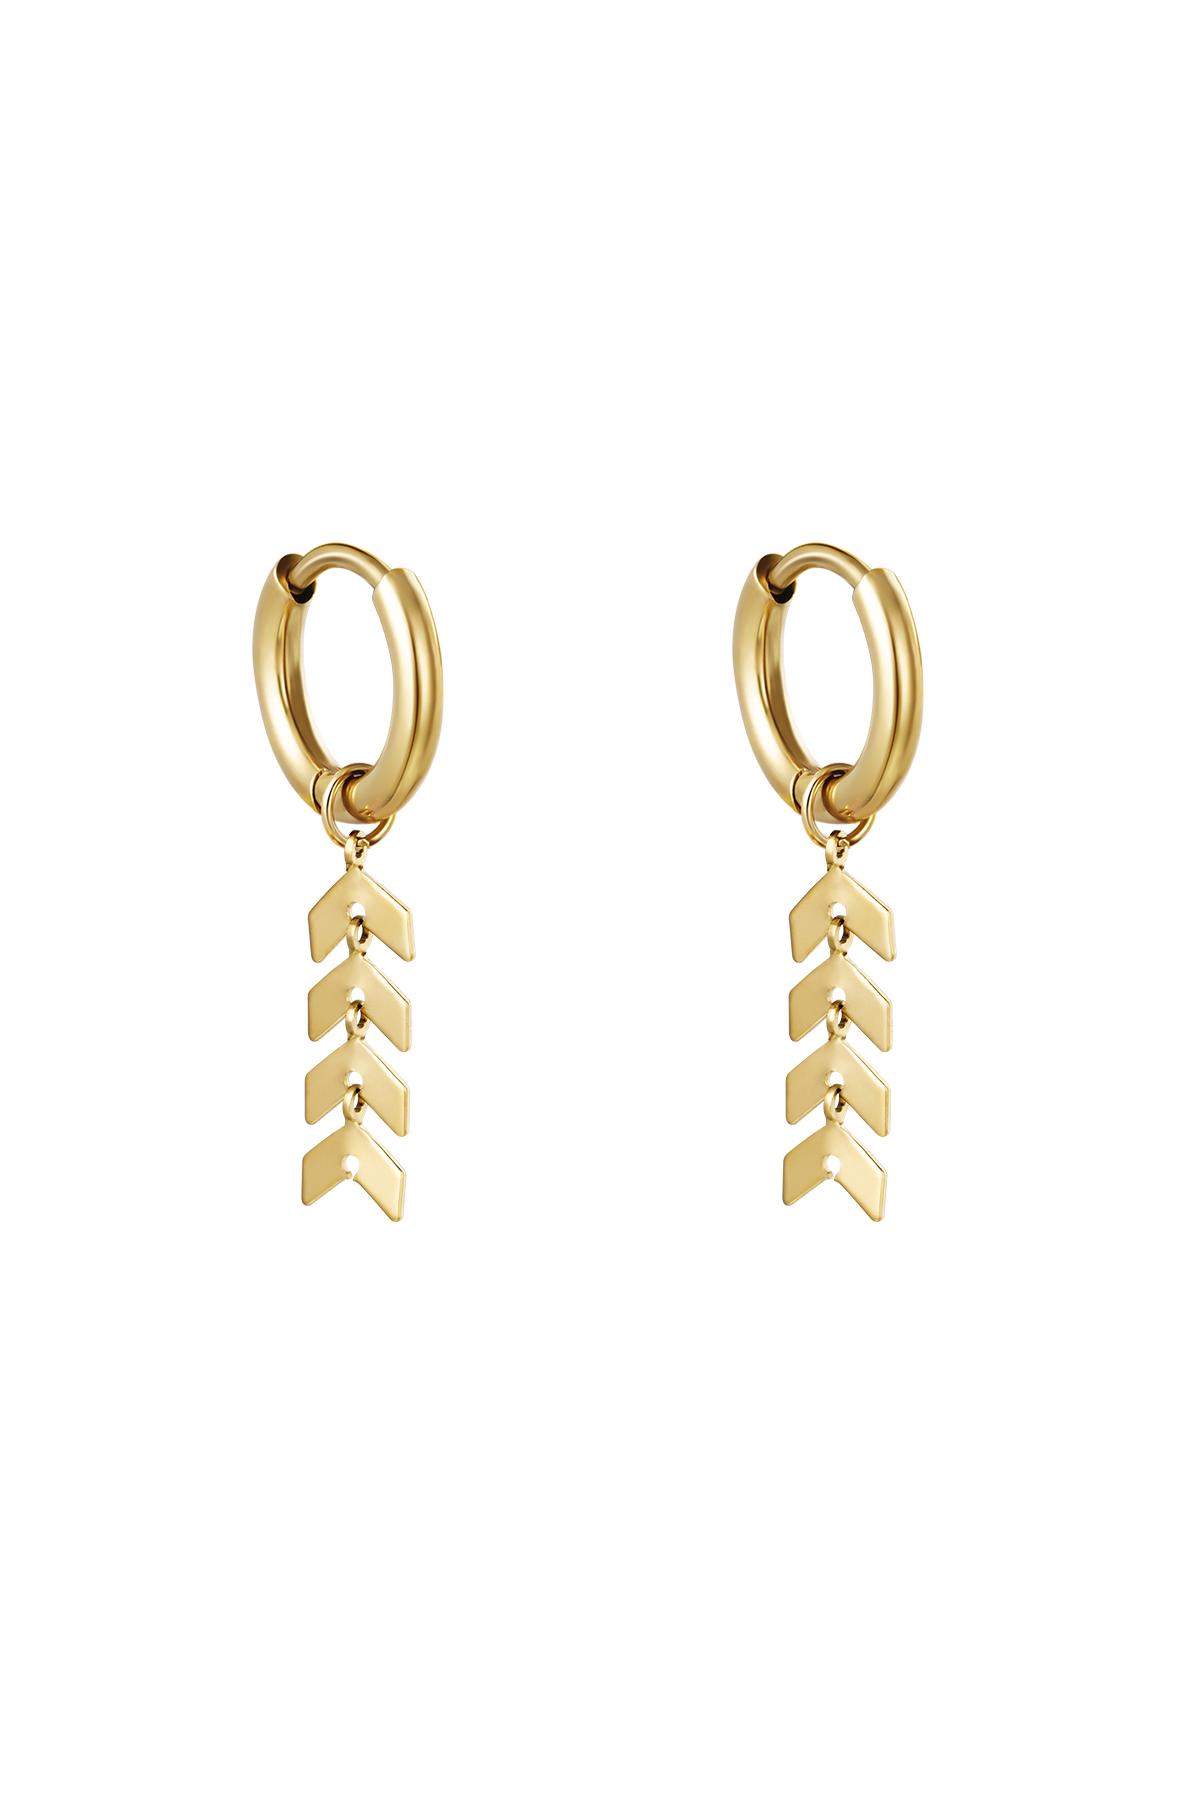 Earrings Fishbone Gold Stainless Steel h5 